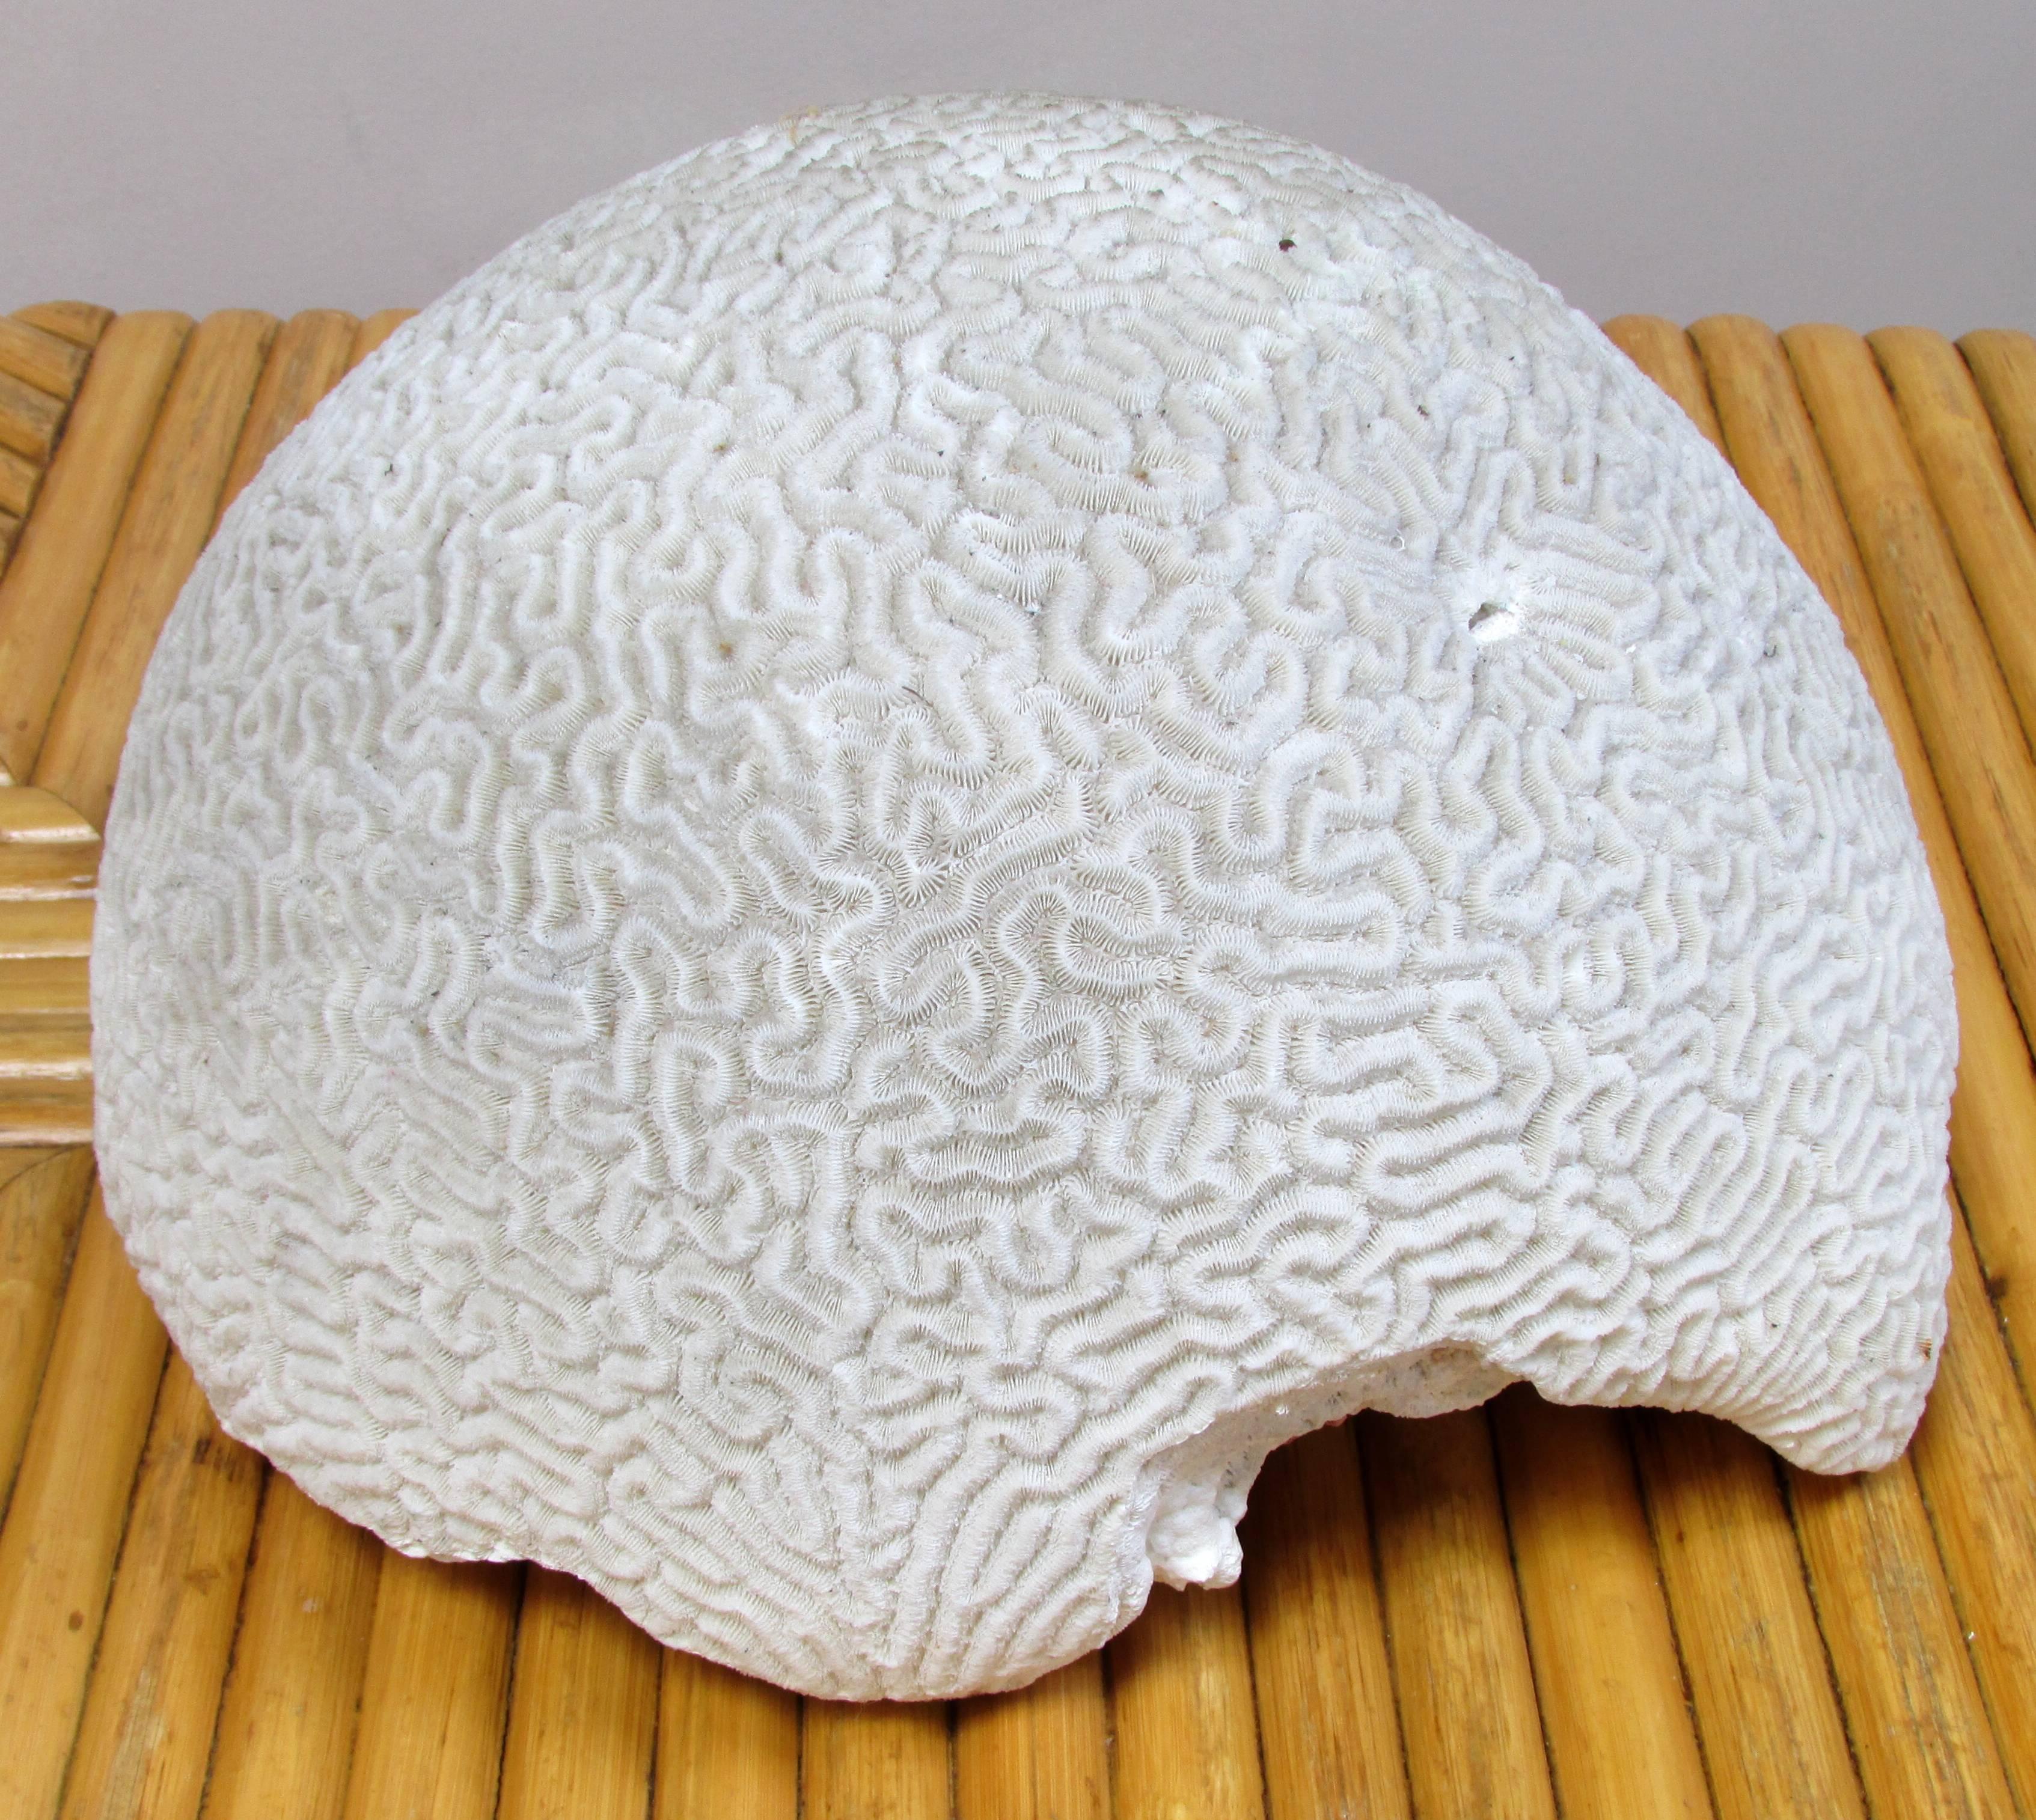 Large piece of brain coral specimen